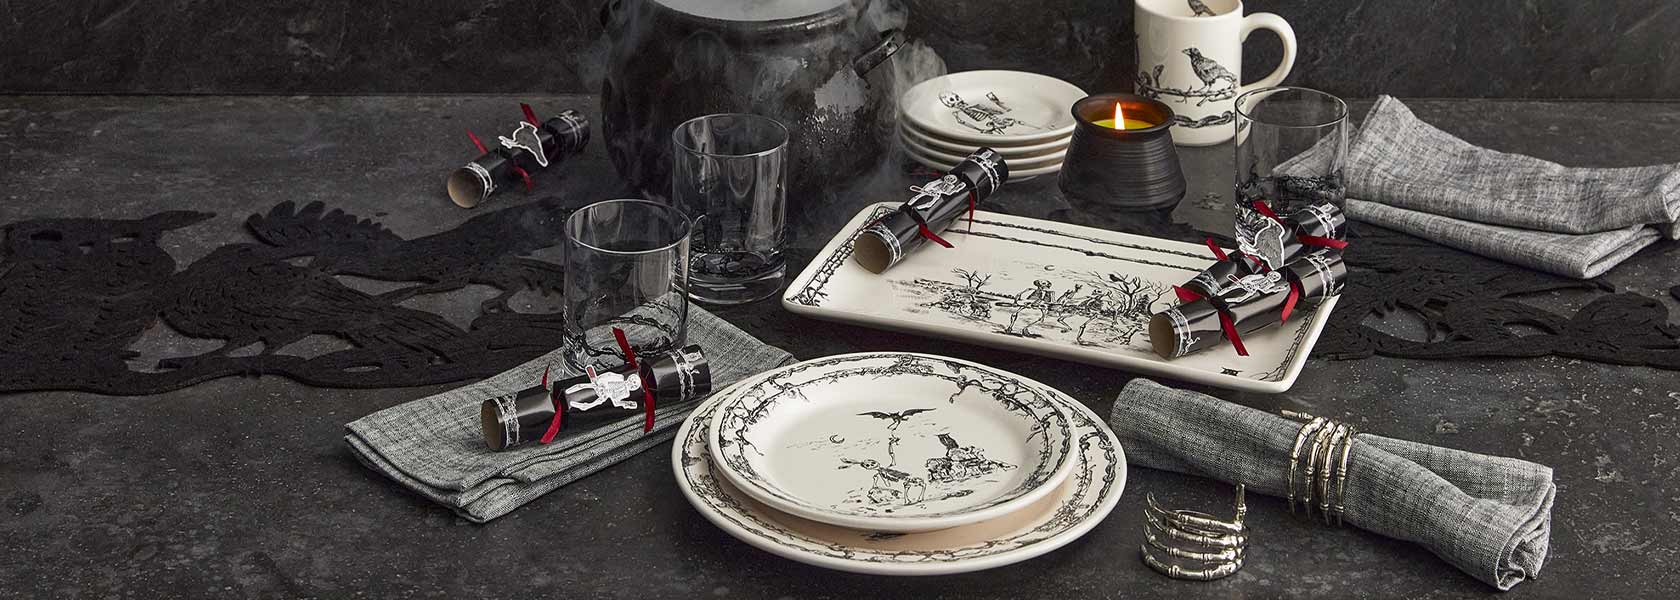 Halloween dinnerware and serveware with skeleton and bat motif